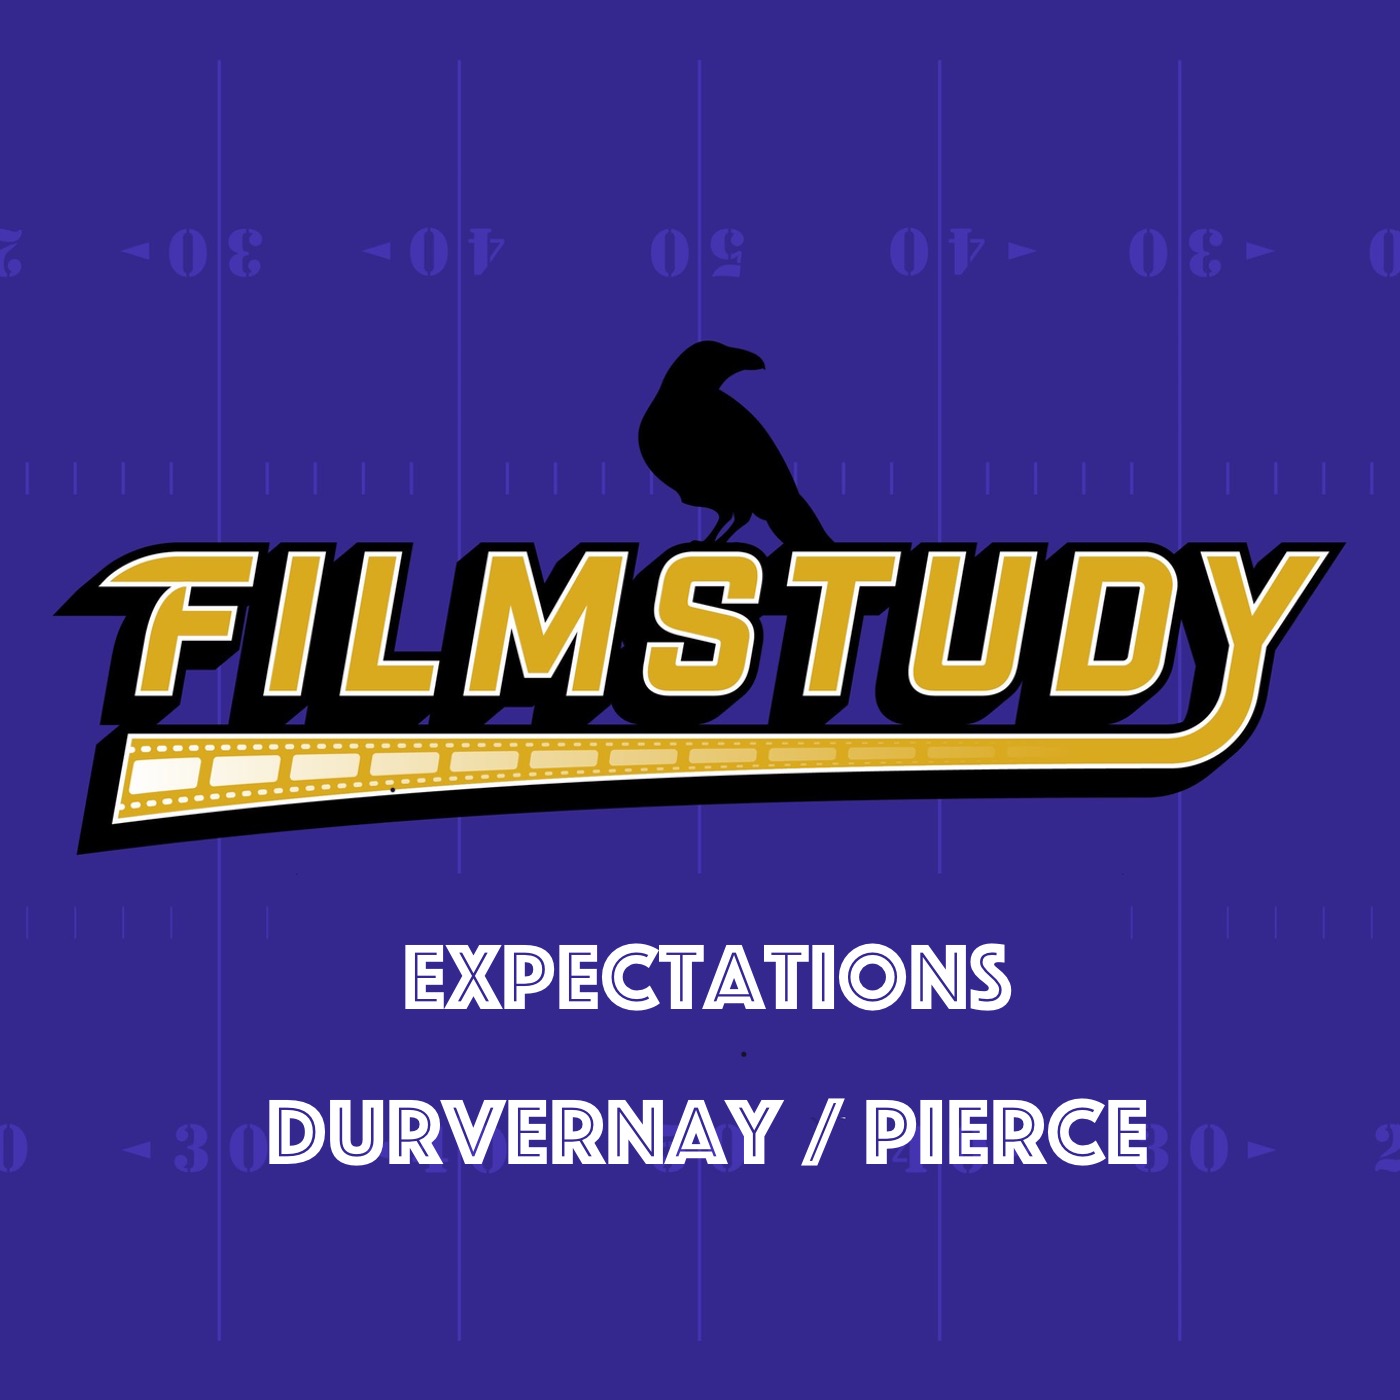 Expectations : Durvernay / Pierce